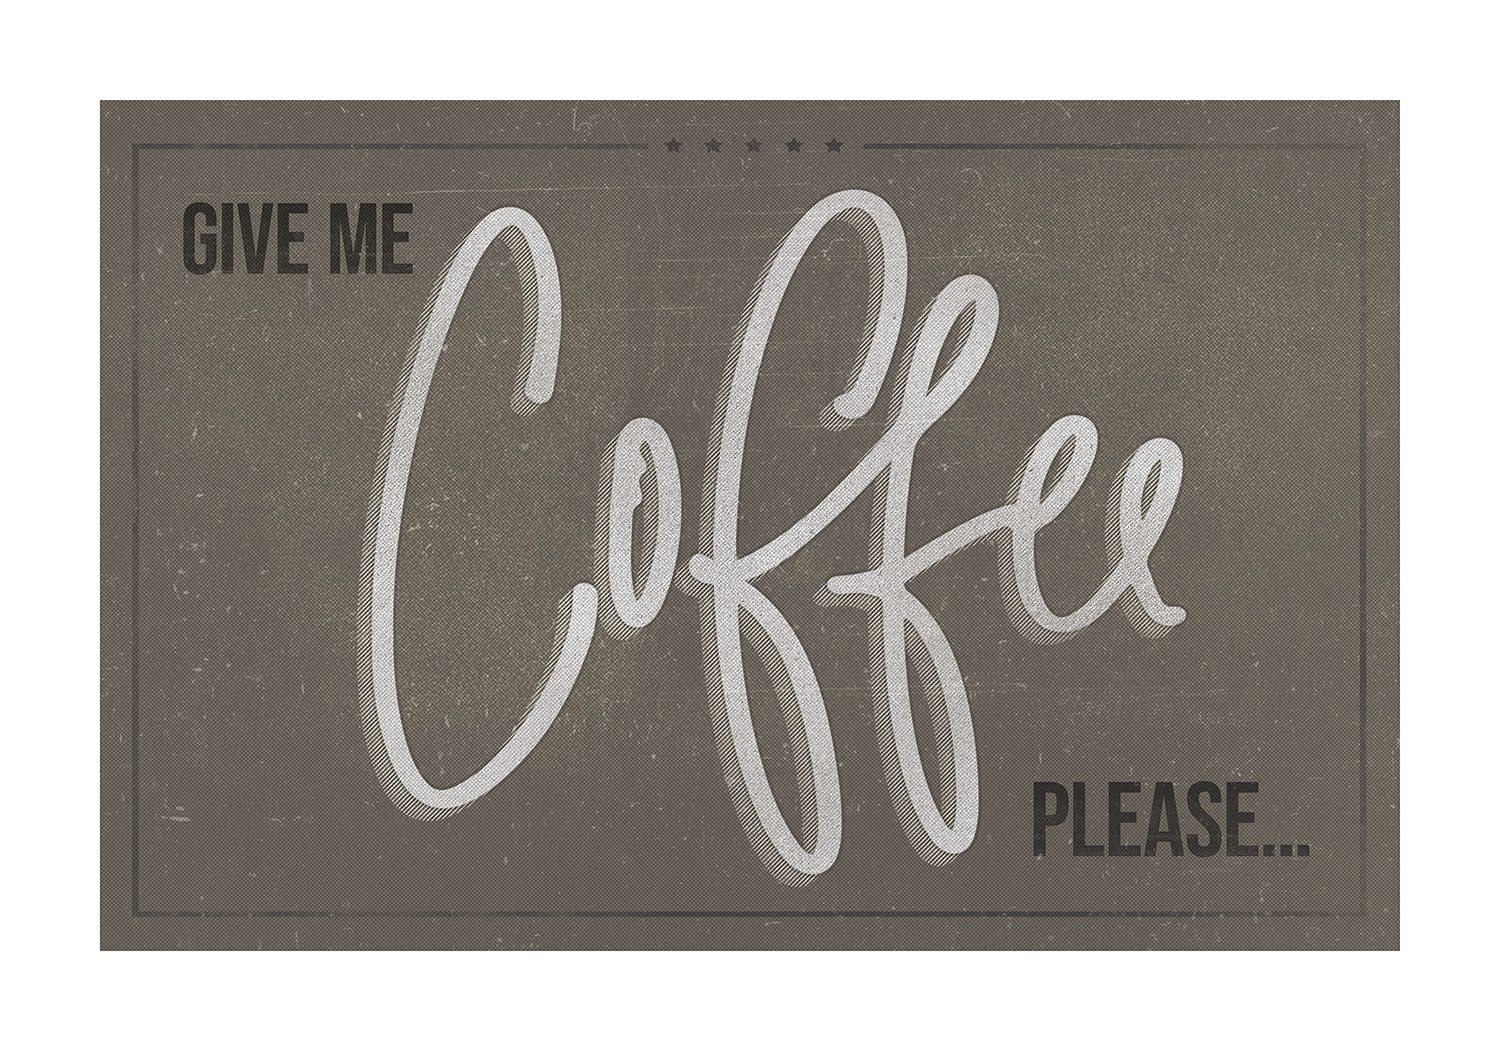 Give me coffe please poster retro vintage